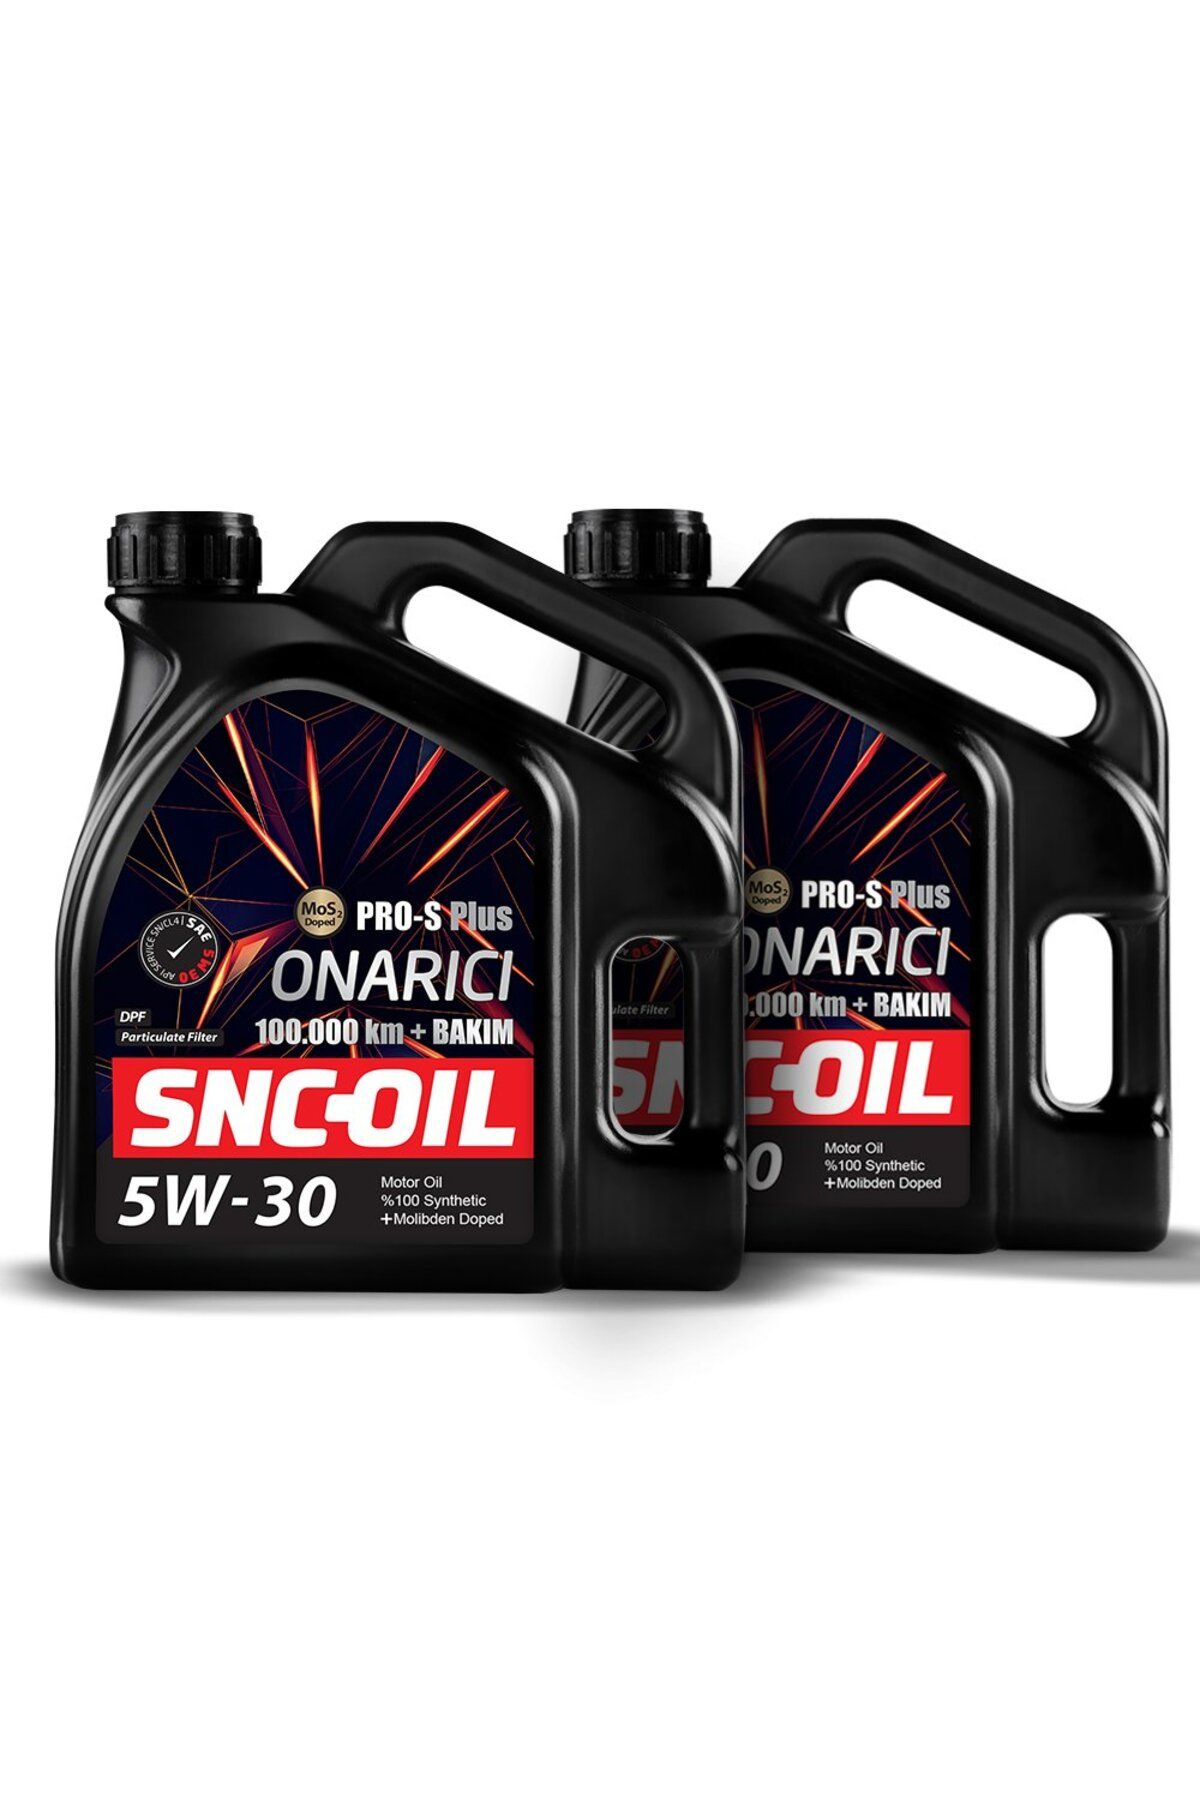 snc Icon Group - SNC-OIL 100.000 Km + Bakım Pro-S Plus Onarıcı 5W-30 Motor Yağı (4+4 Litre)